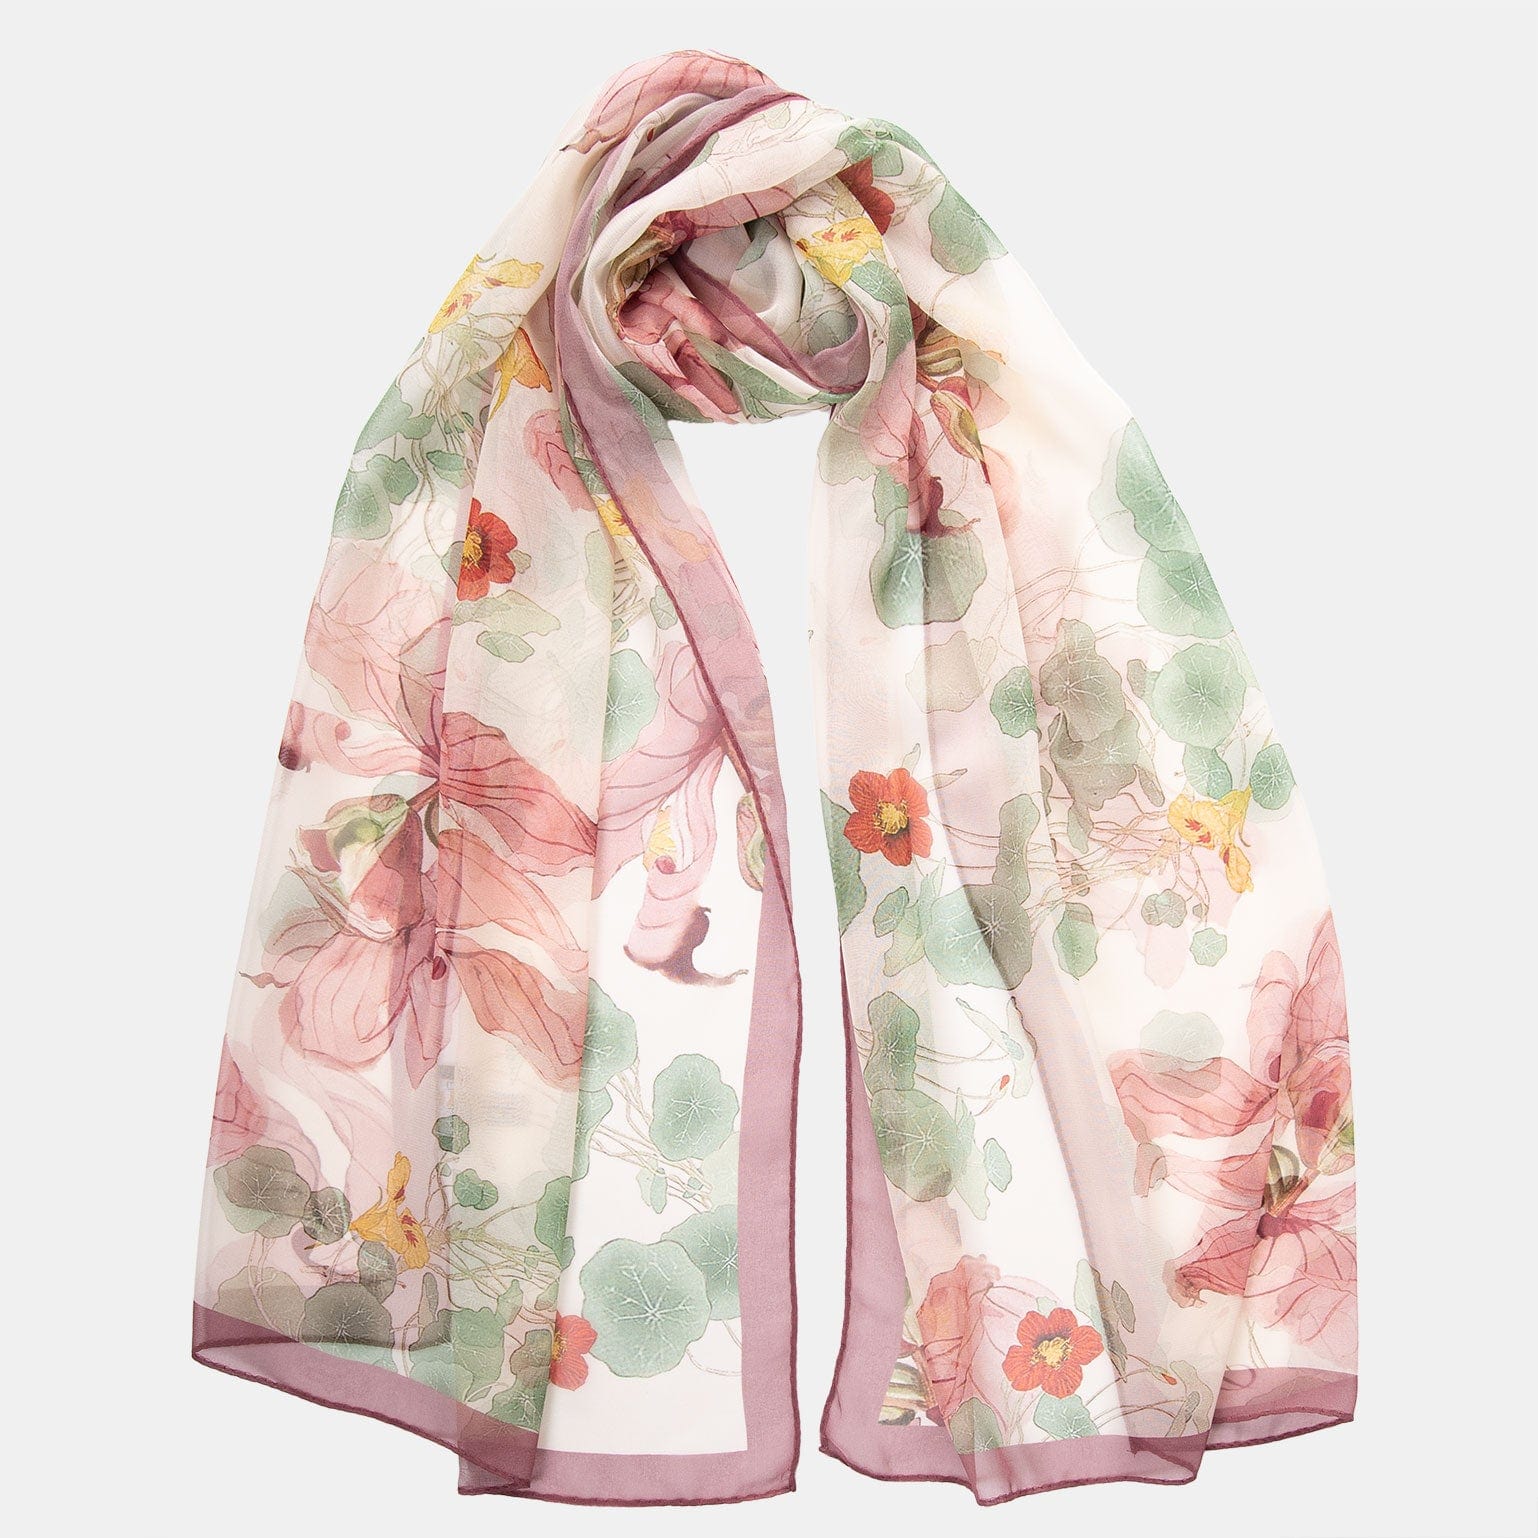 Antique rose floral print Italian silk scarf